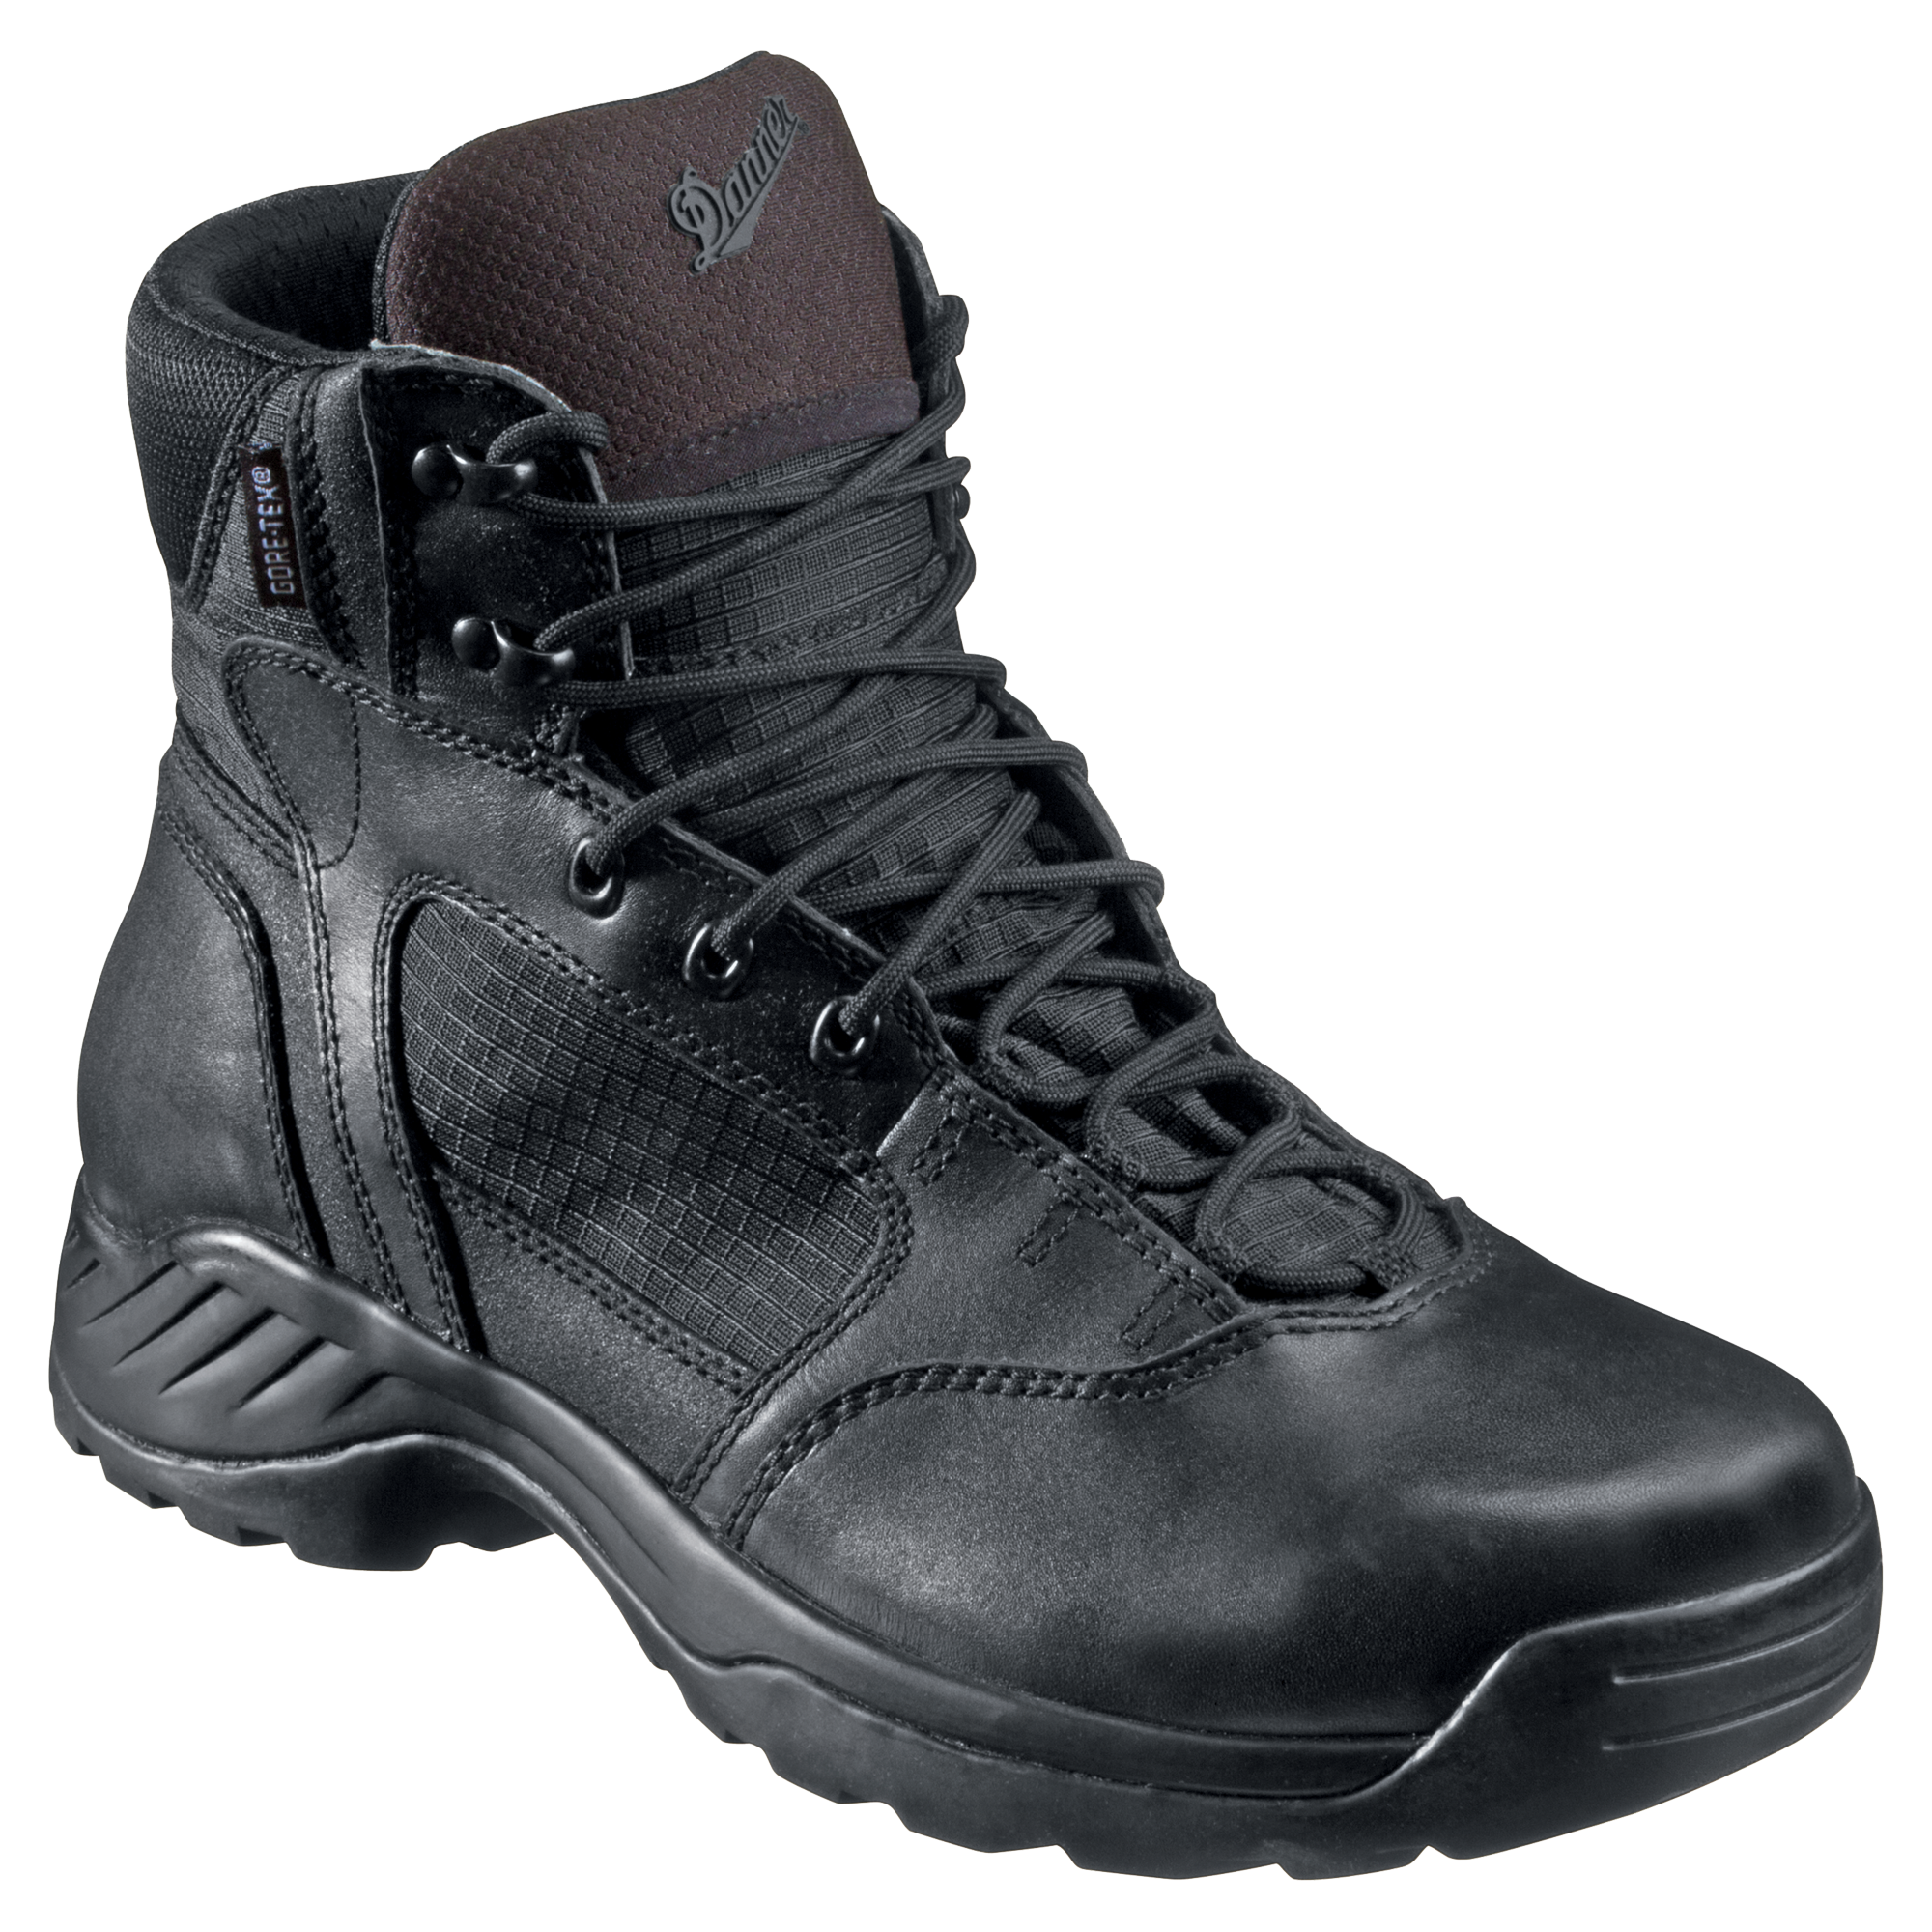 Danner Kinetic Side-Zip GORE-TEX Work Boots for Men - Black - 8.5W